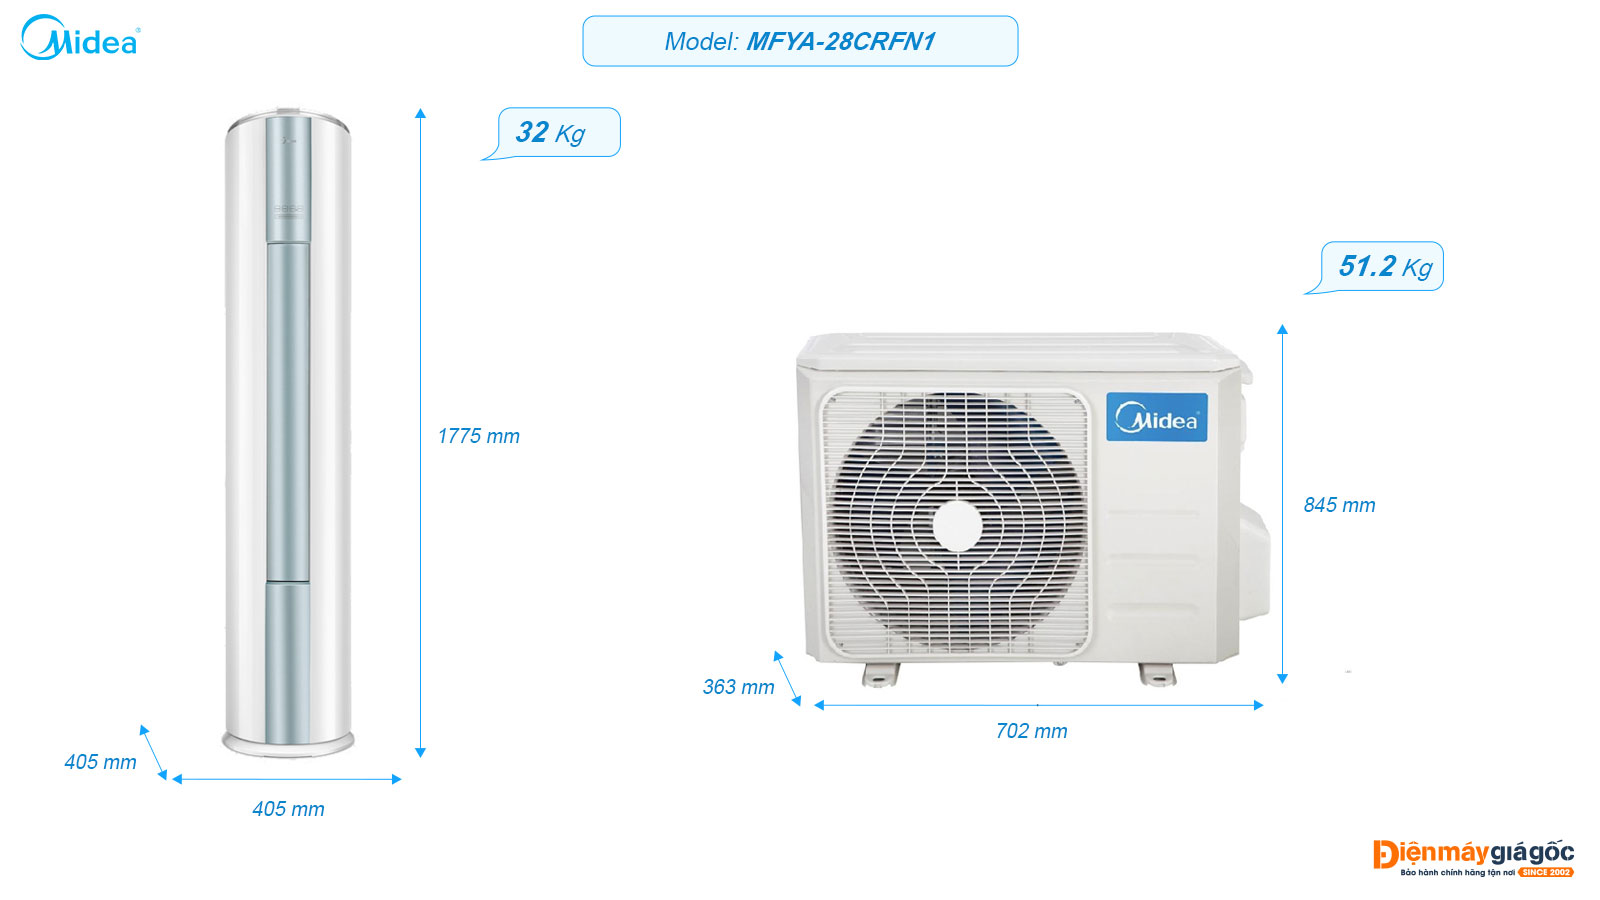 Midea floor standing air conditioning Inverter (2.5Hp) MFYA-28CRFN1